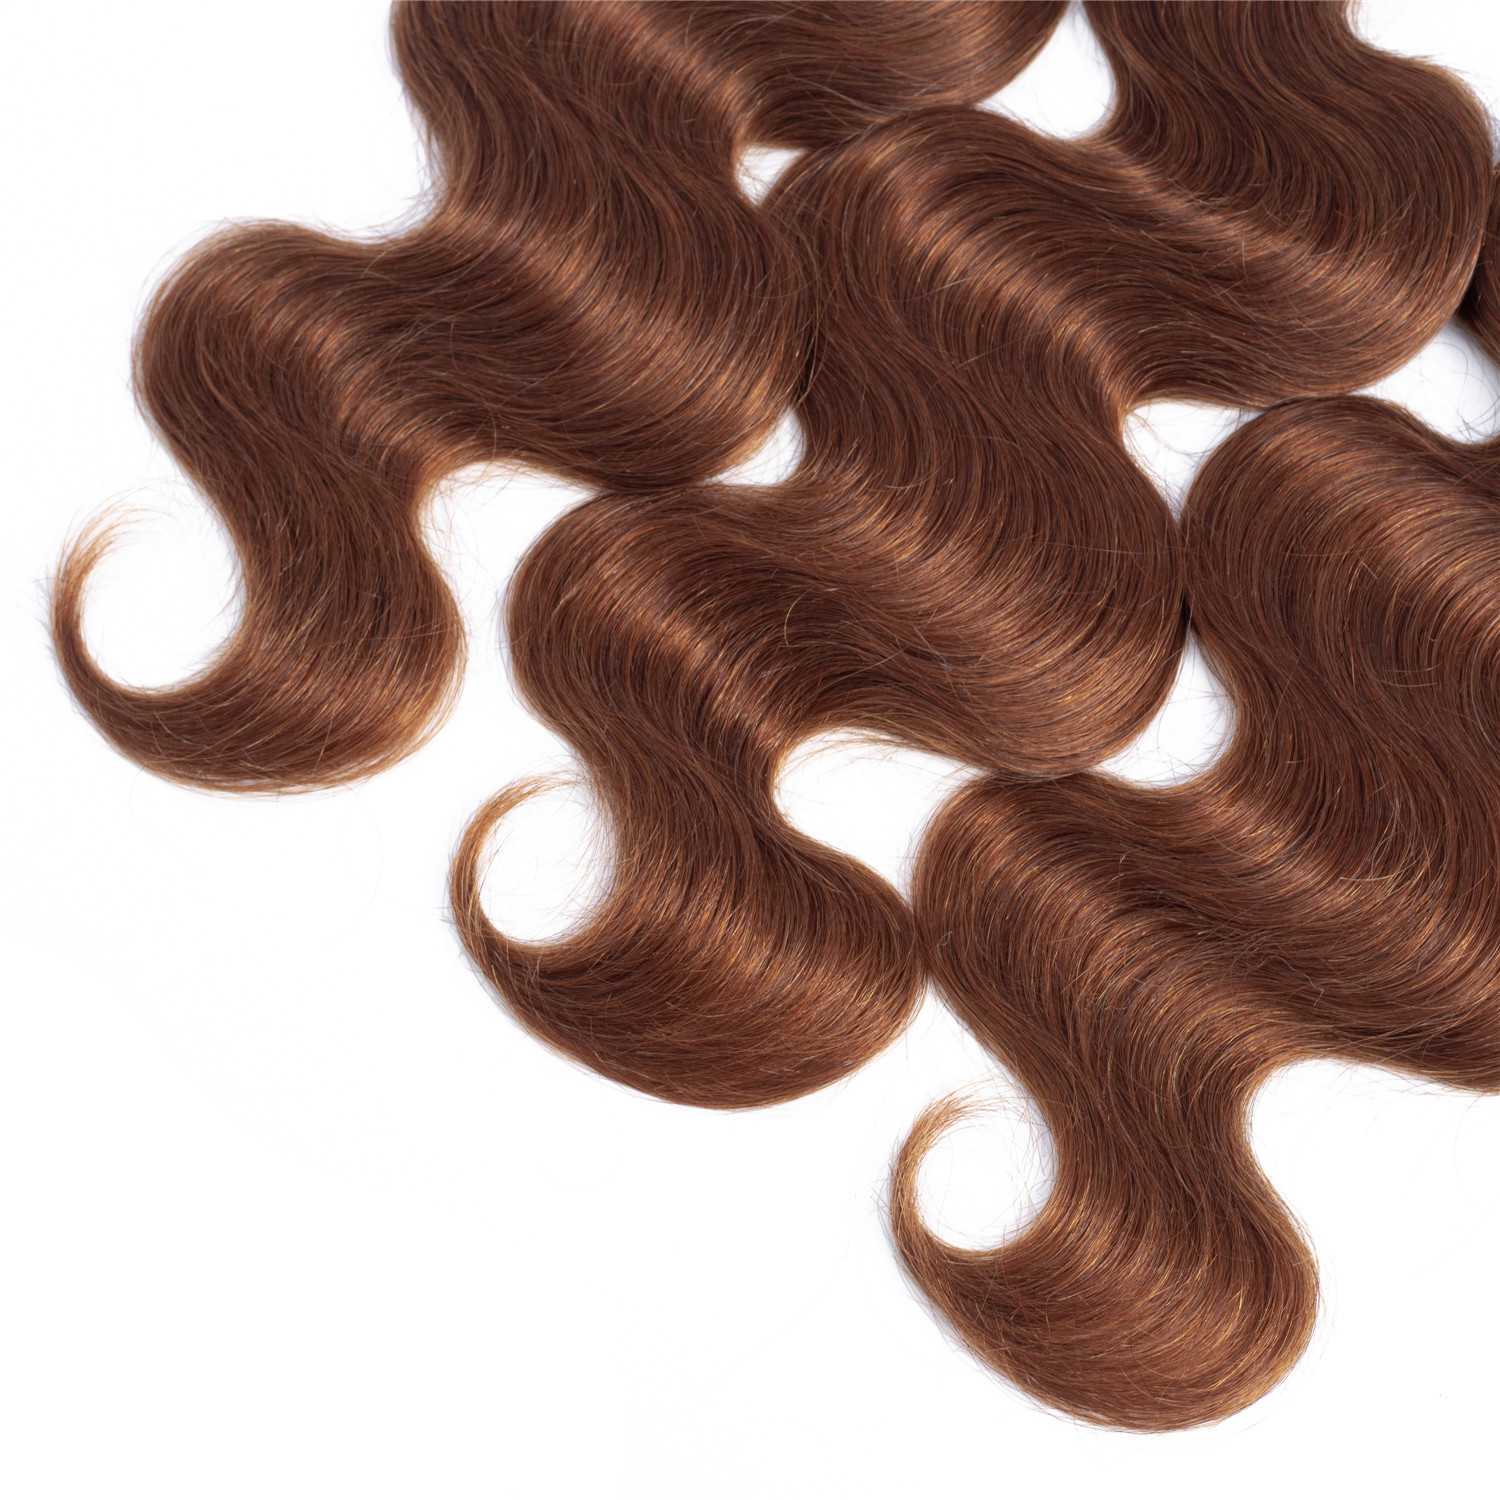 Wigsbuy Human Hair Weave Light Brown #4 Body Wave 3 Bundle Deals